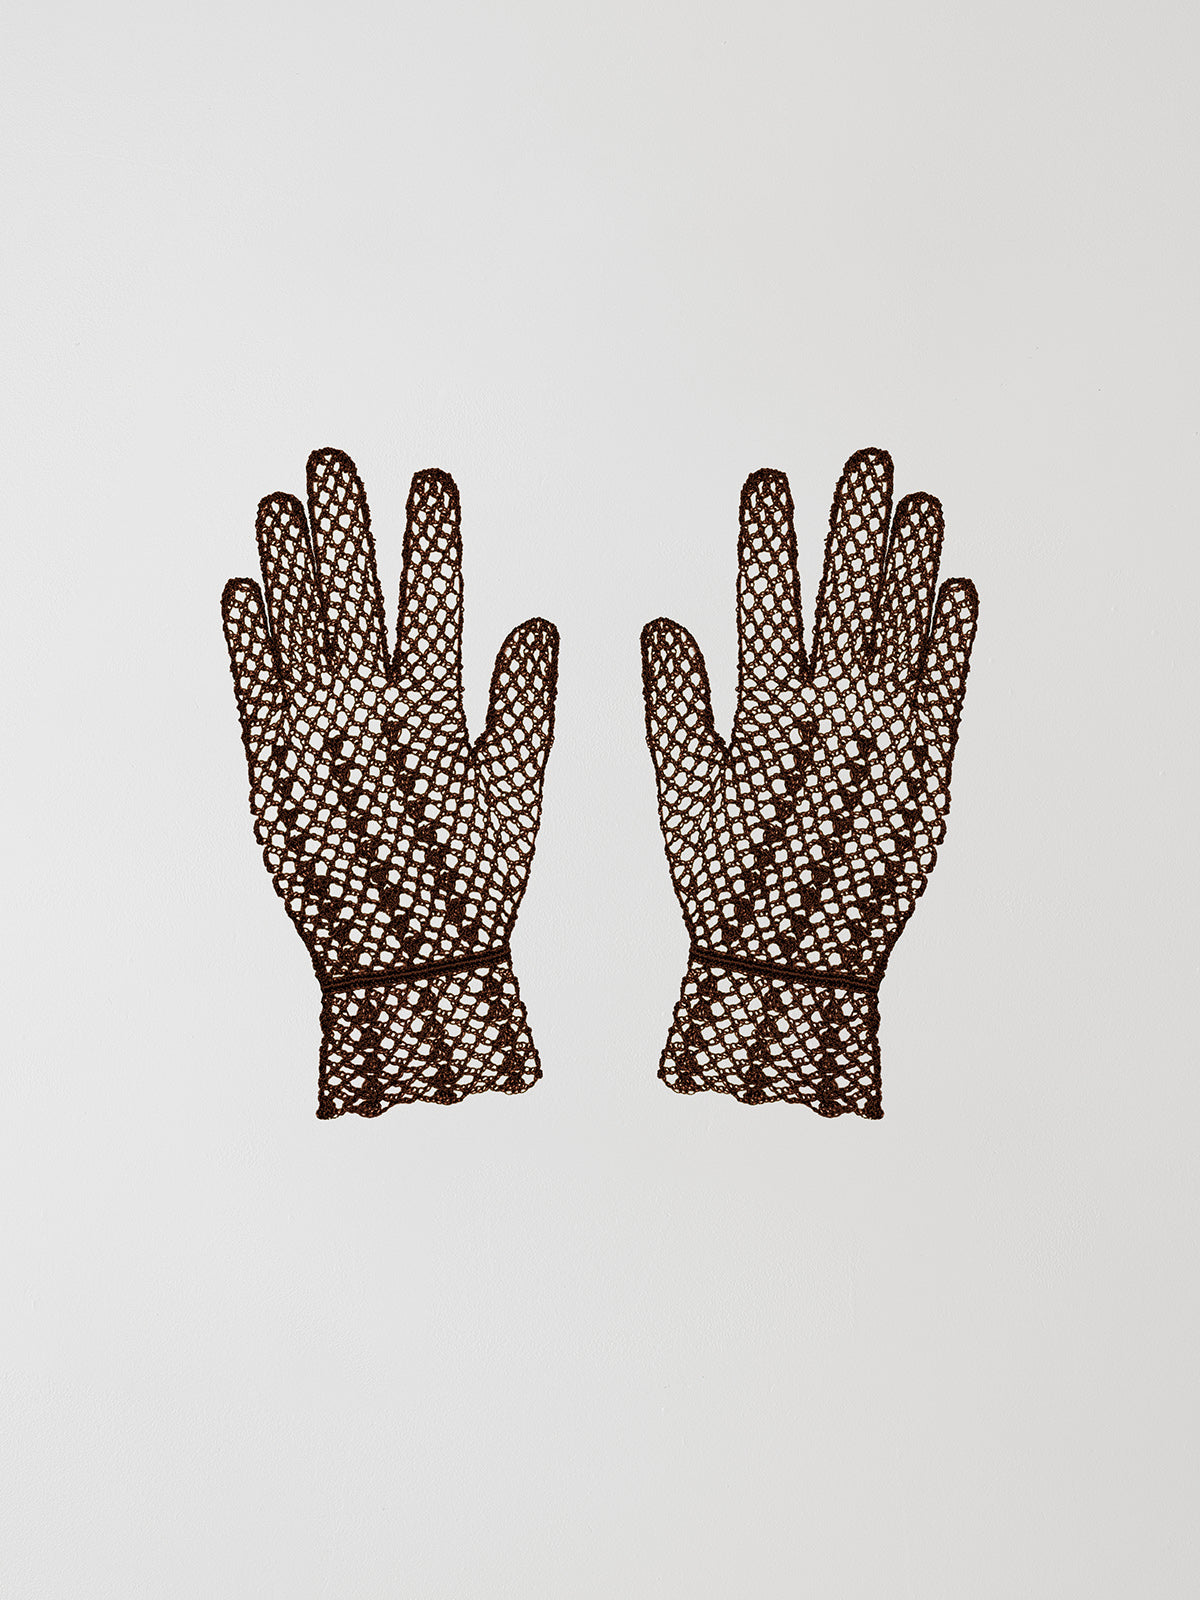 Grandma Gloves Chocolate are elegant mesh gloves handmade in brown silk.